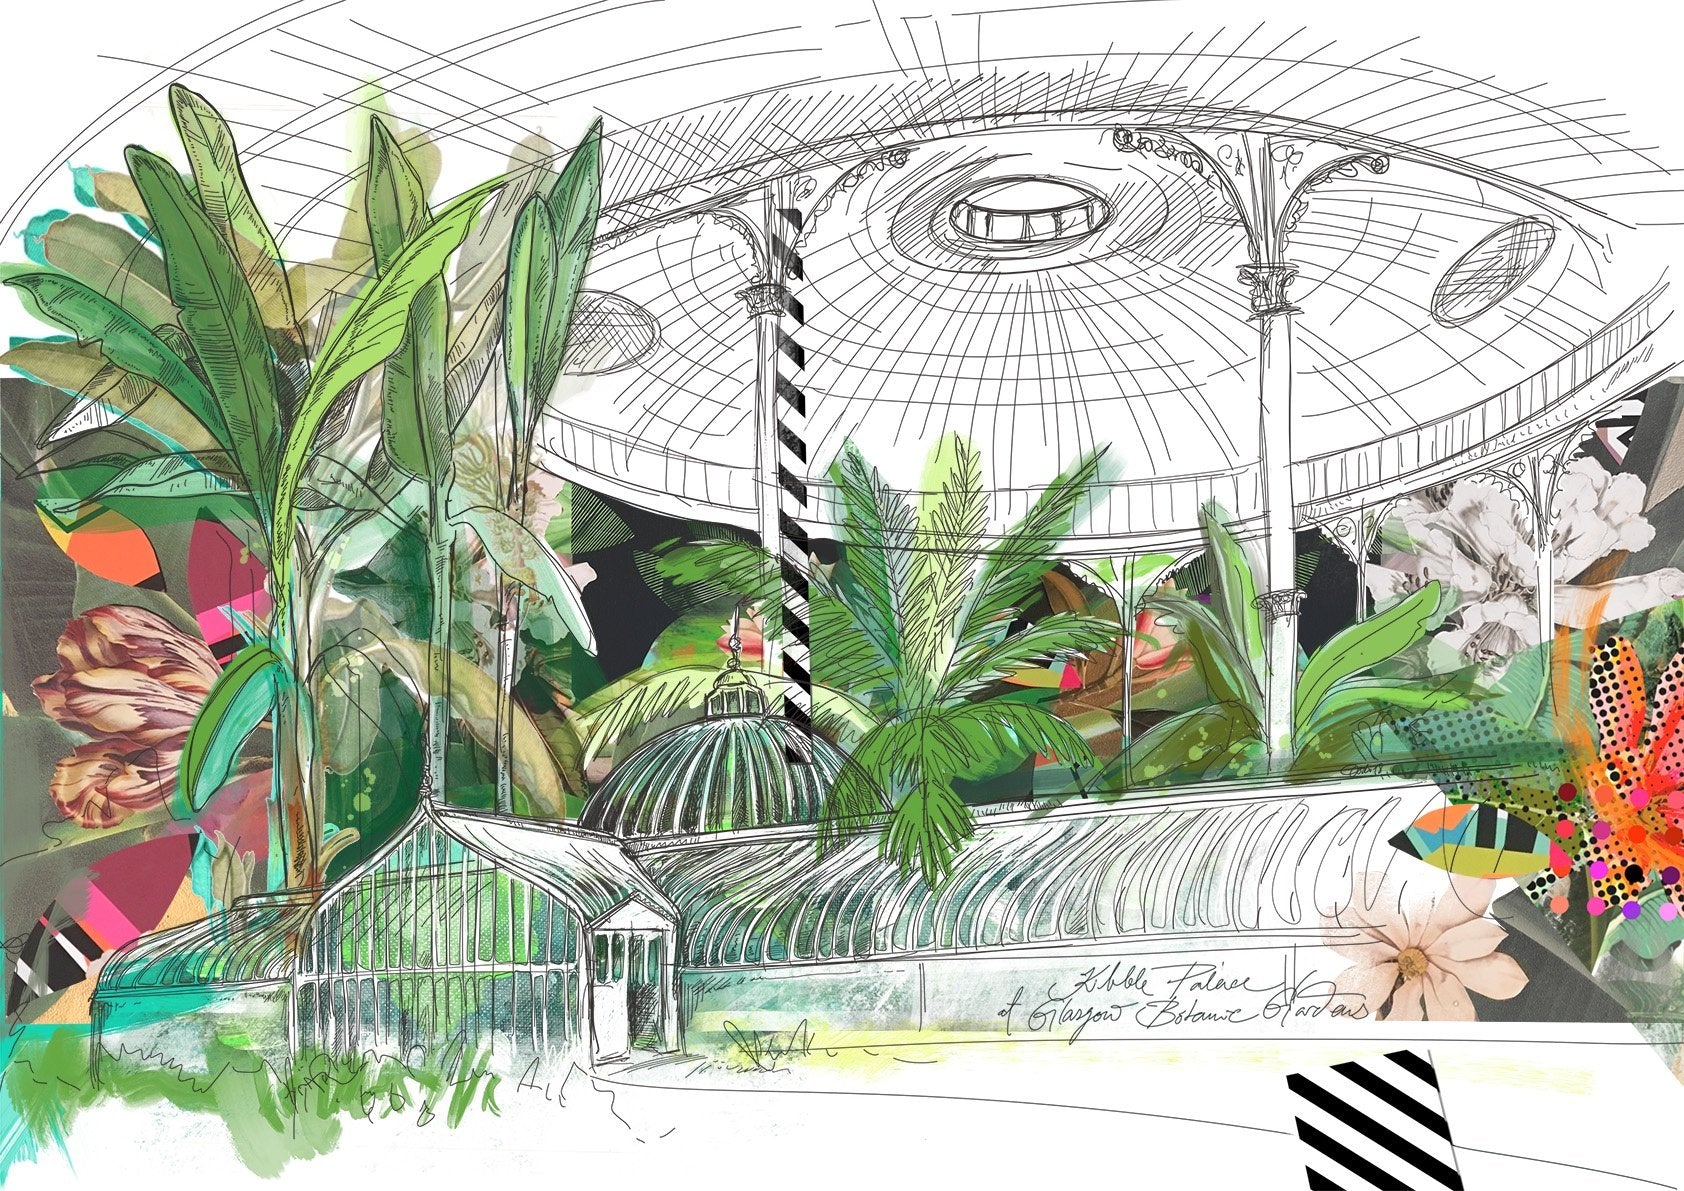 Kibble Palace of Glasgow Botanic Gardens A3 Print